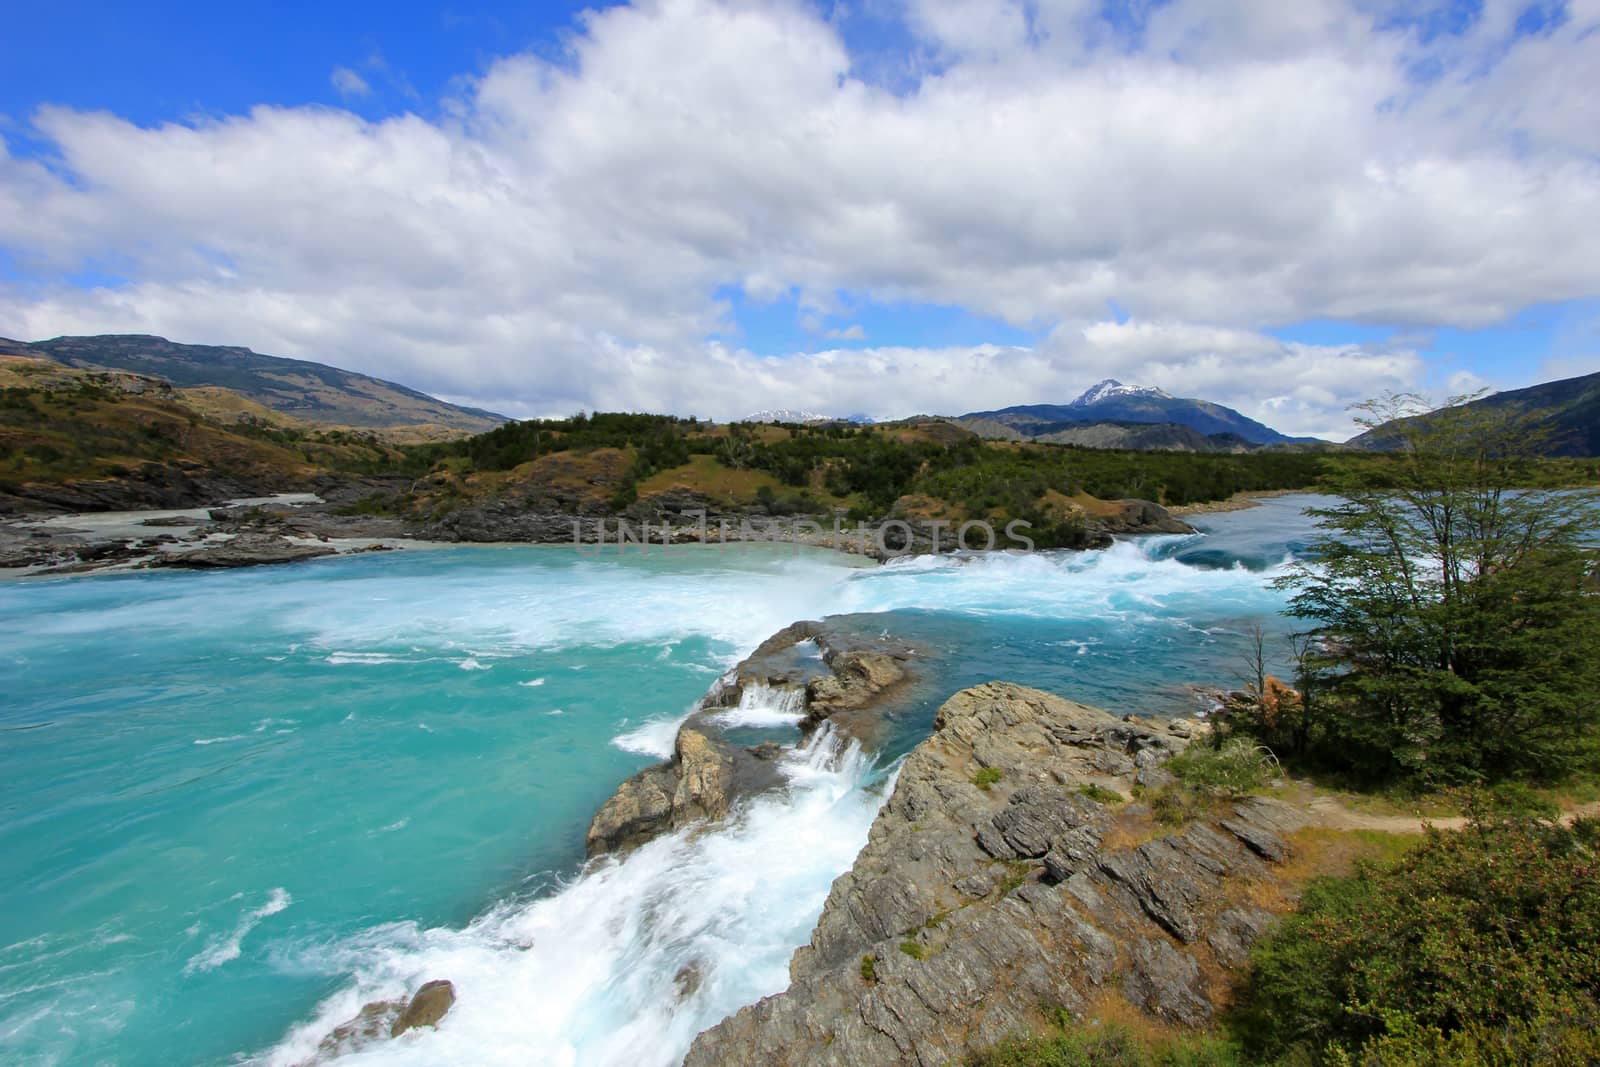 Deep blue Baker river, Carretera Austral, Chile